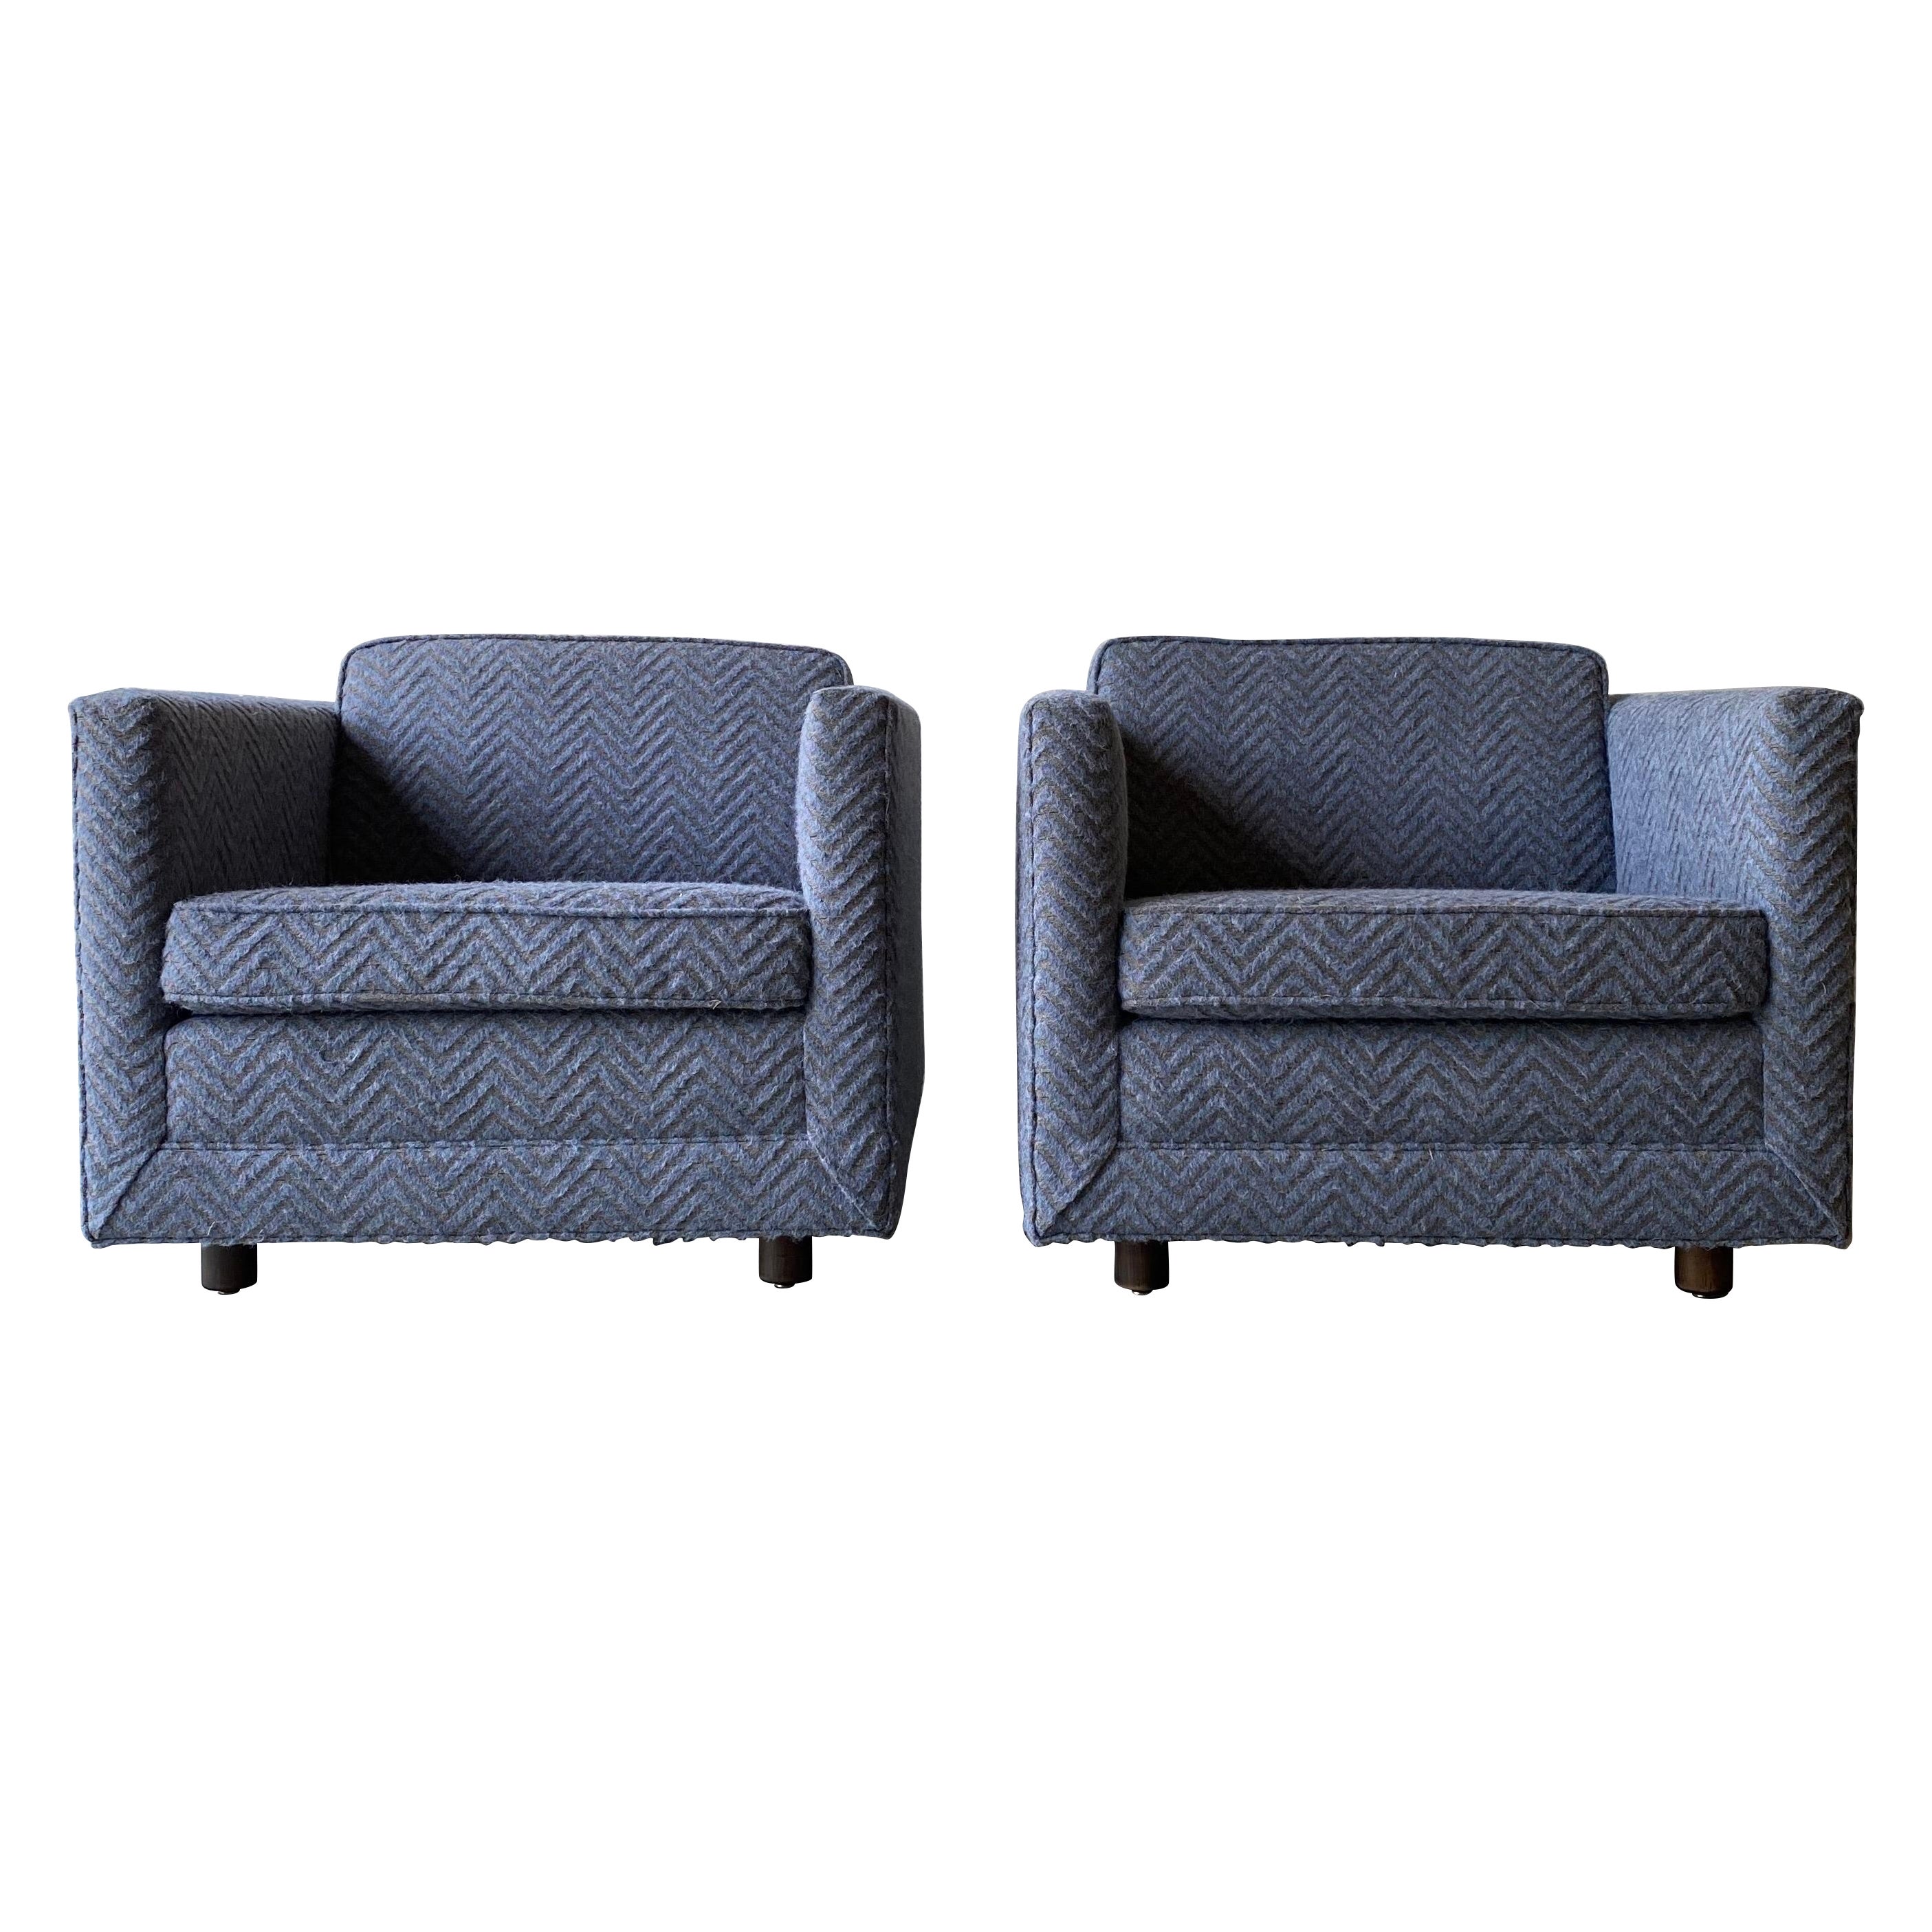 Ward Bennett Cube Lounge Chairs, Brickel Furniture- A Pair